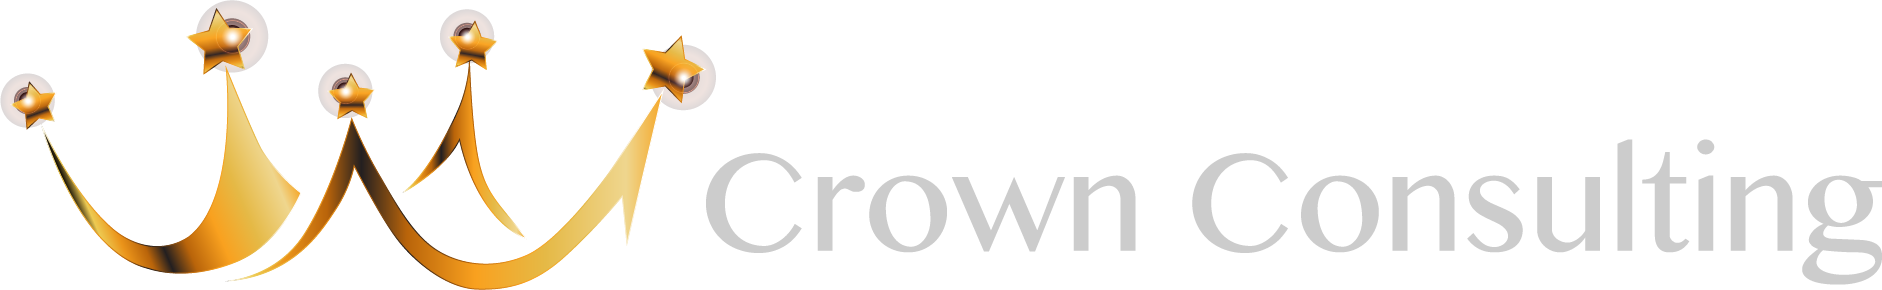 Crown Consulting FL, LLC